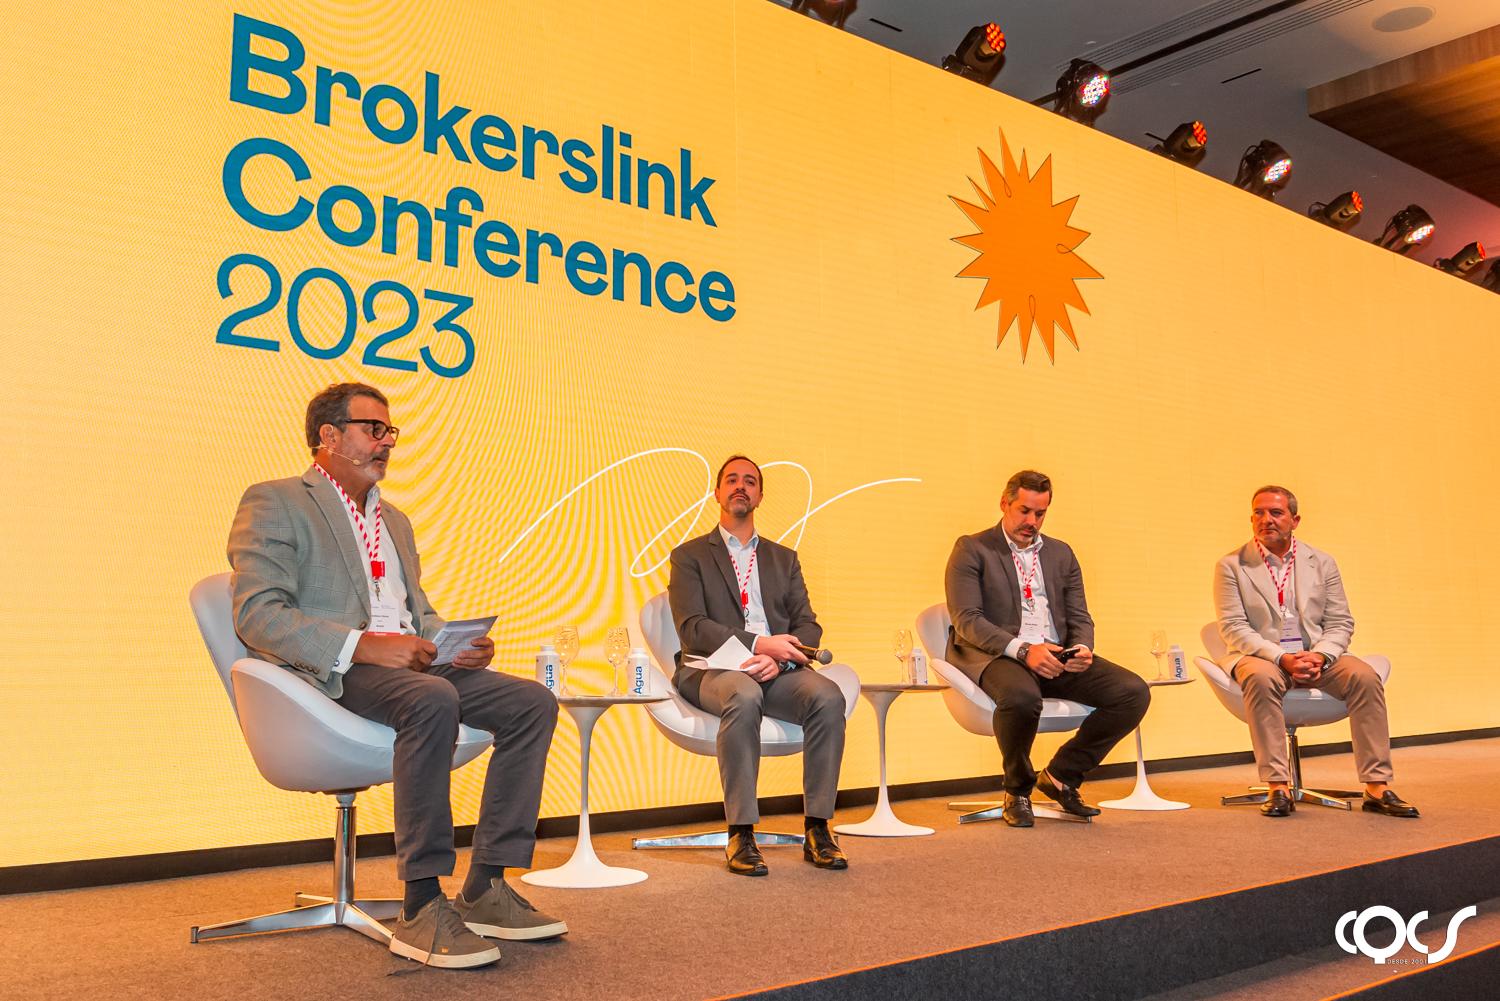 Brokerslink Conference 2023 CQCS